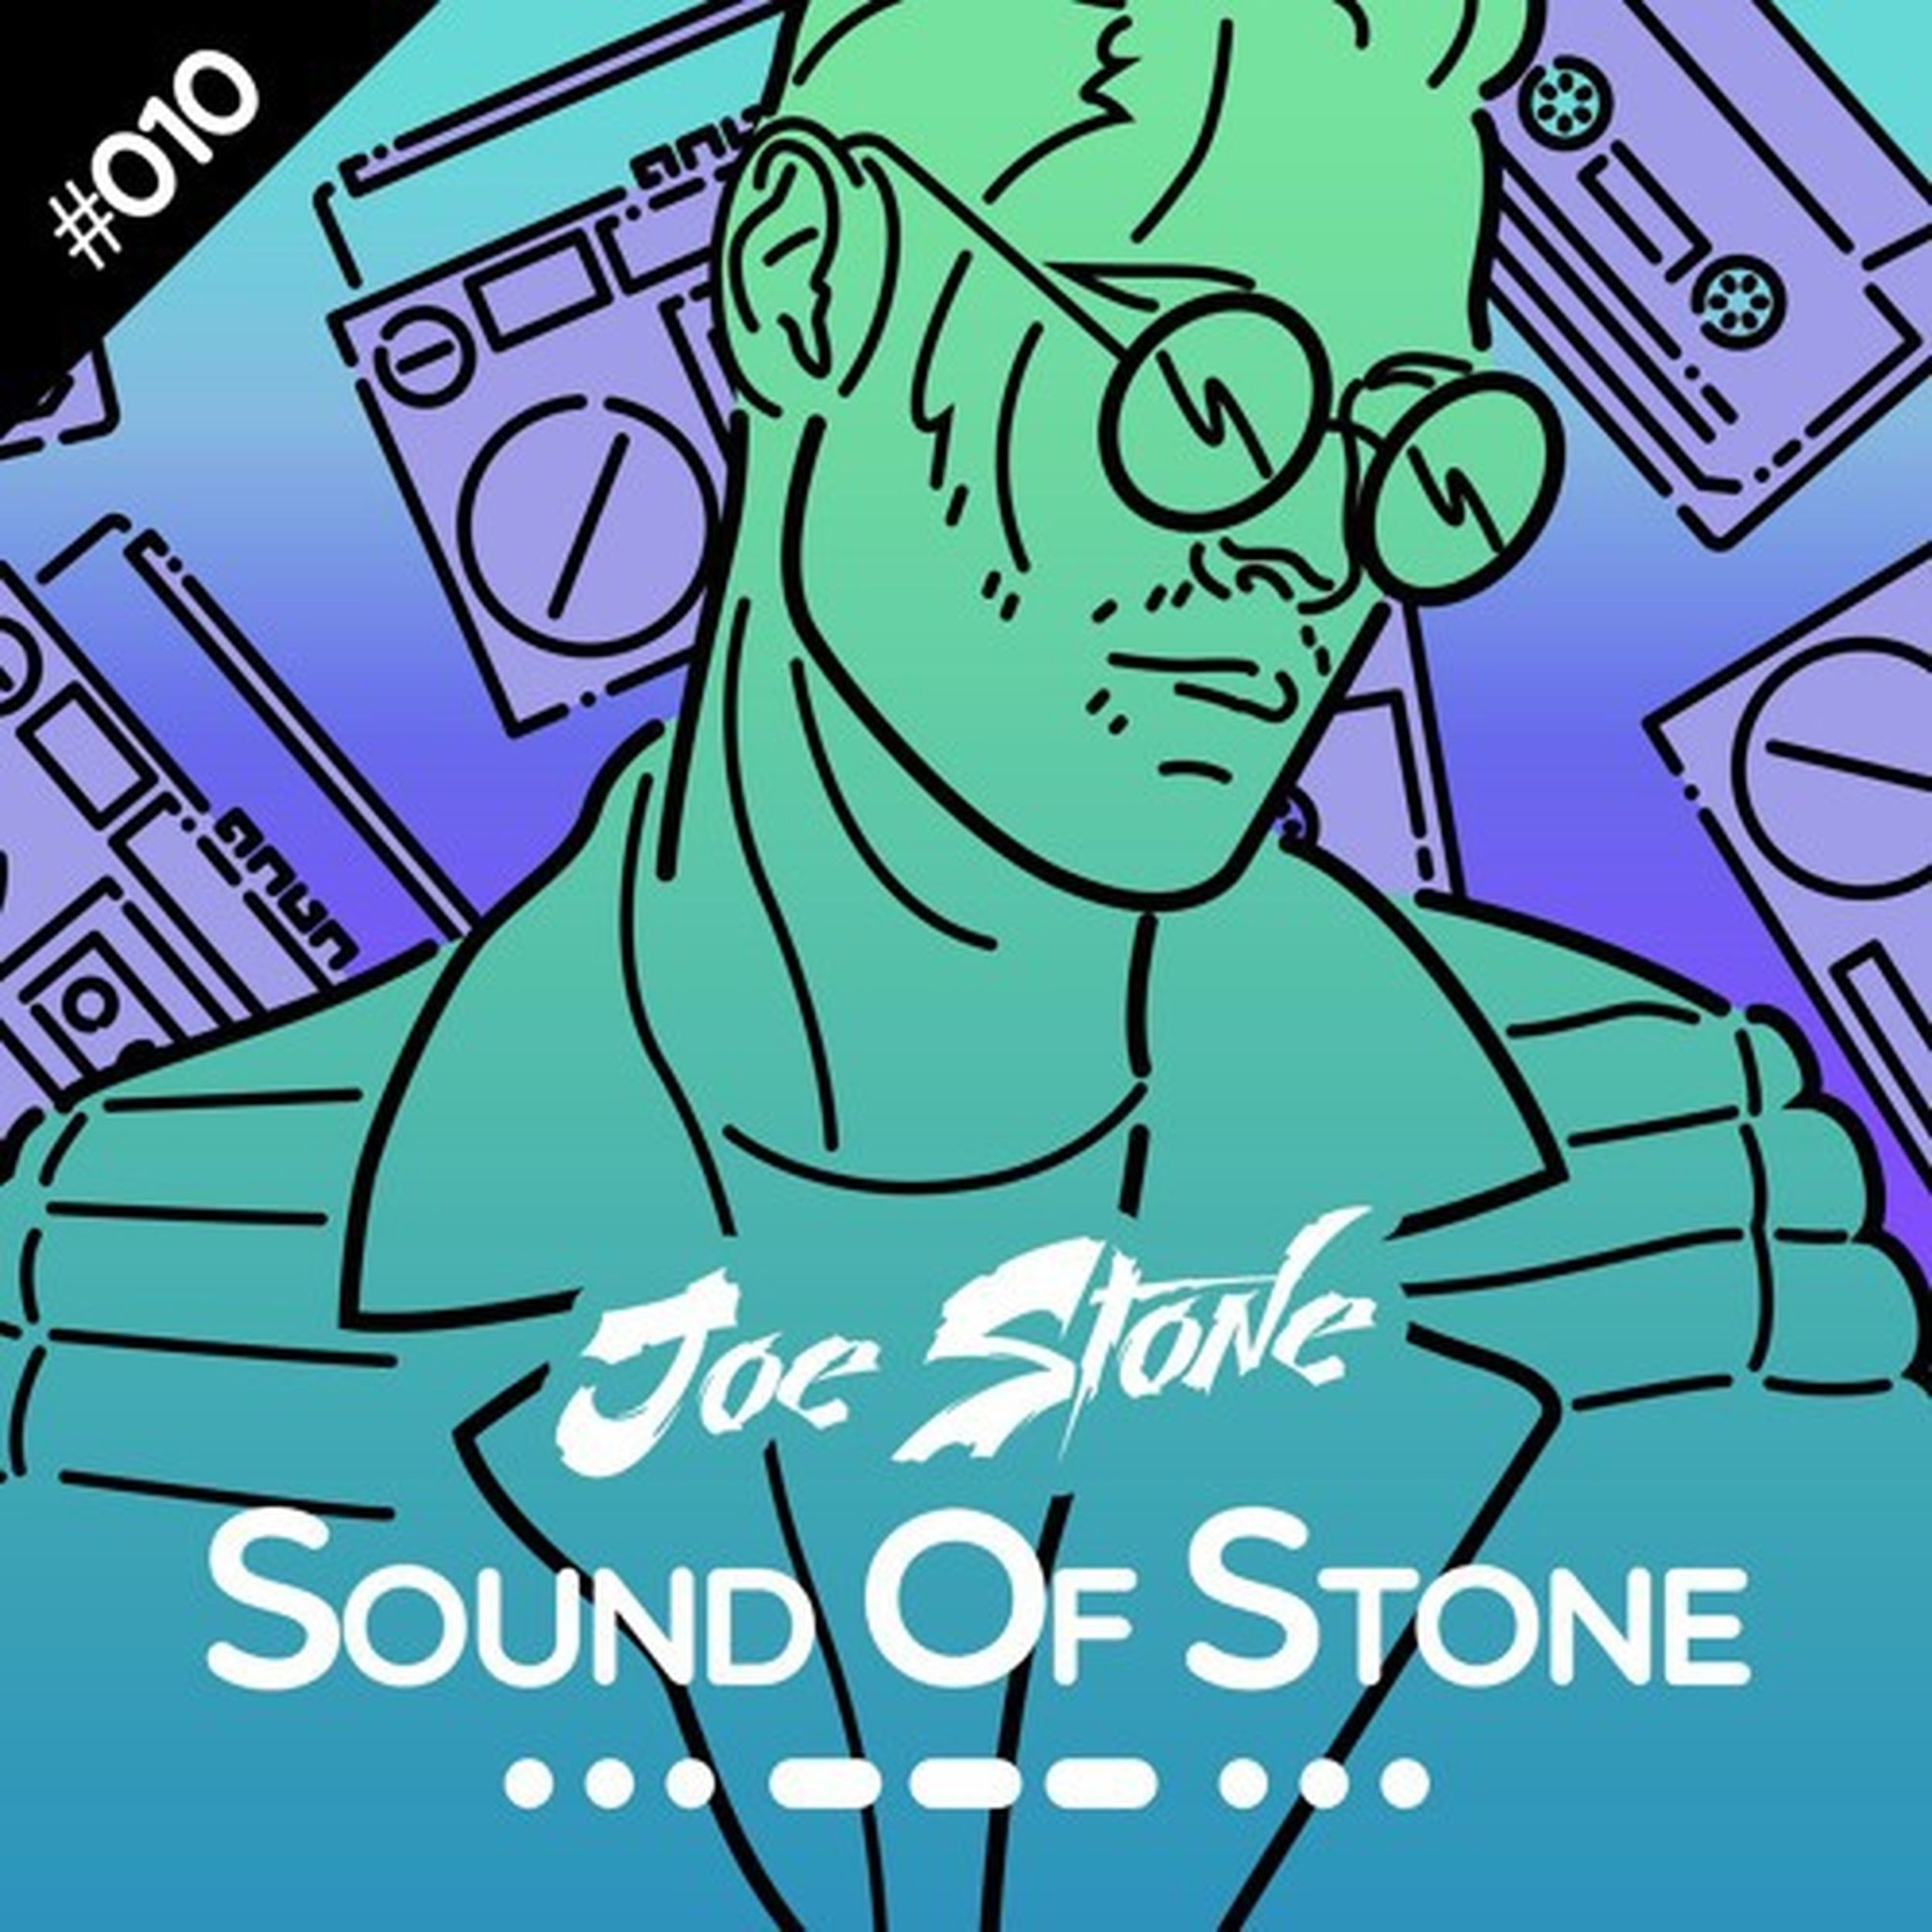 Joes stone. Stone саунд. Joe Stone.